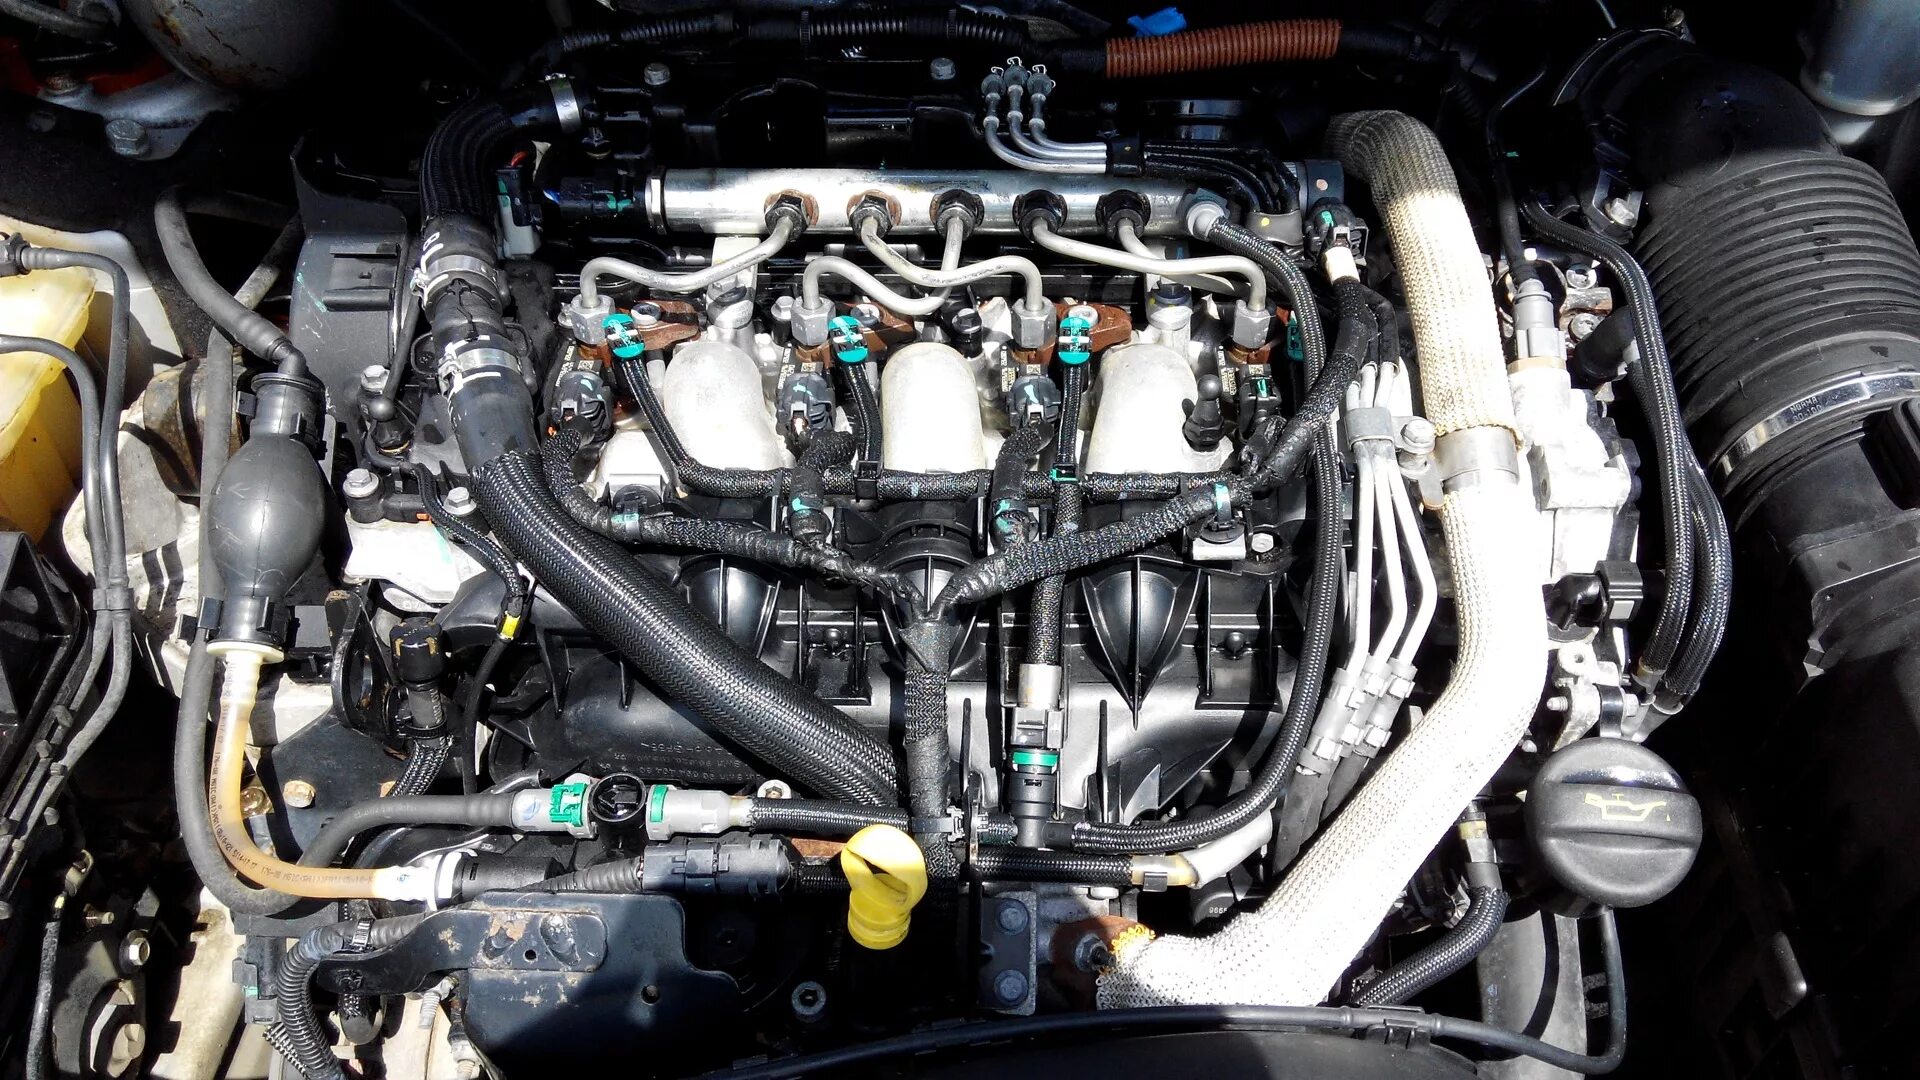 2.5 л 170 л с. Citroen c5 2.2 HDI. Citroen c5 дизель. 2.2 HDI 204. Двигатель HDI 2.2 дизель.